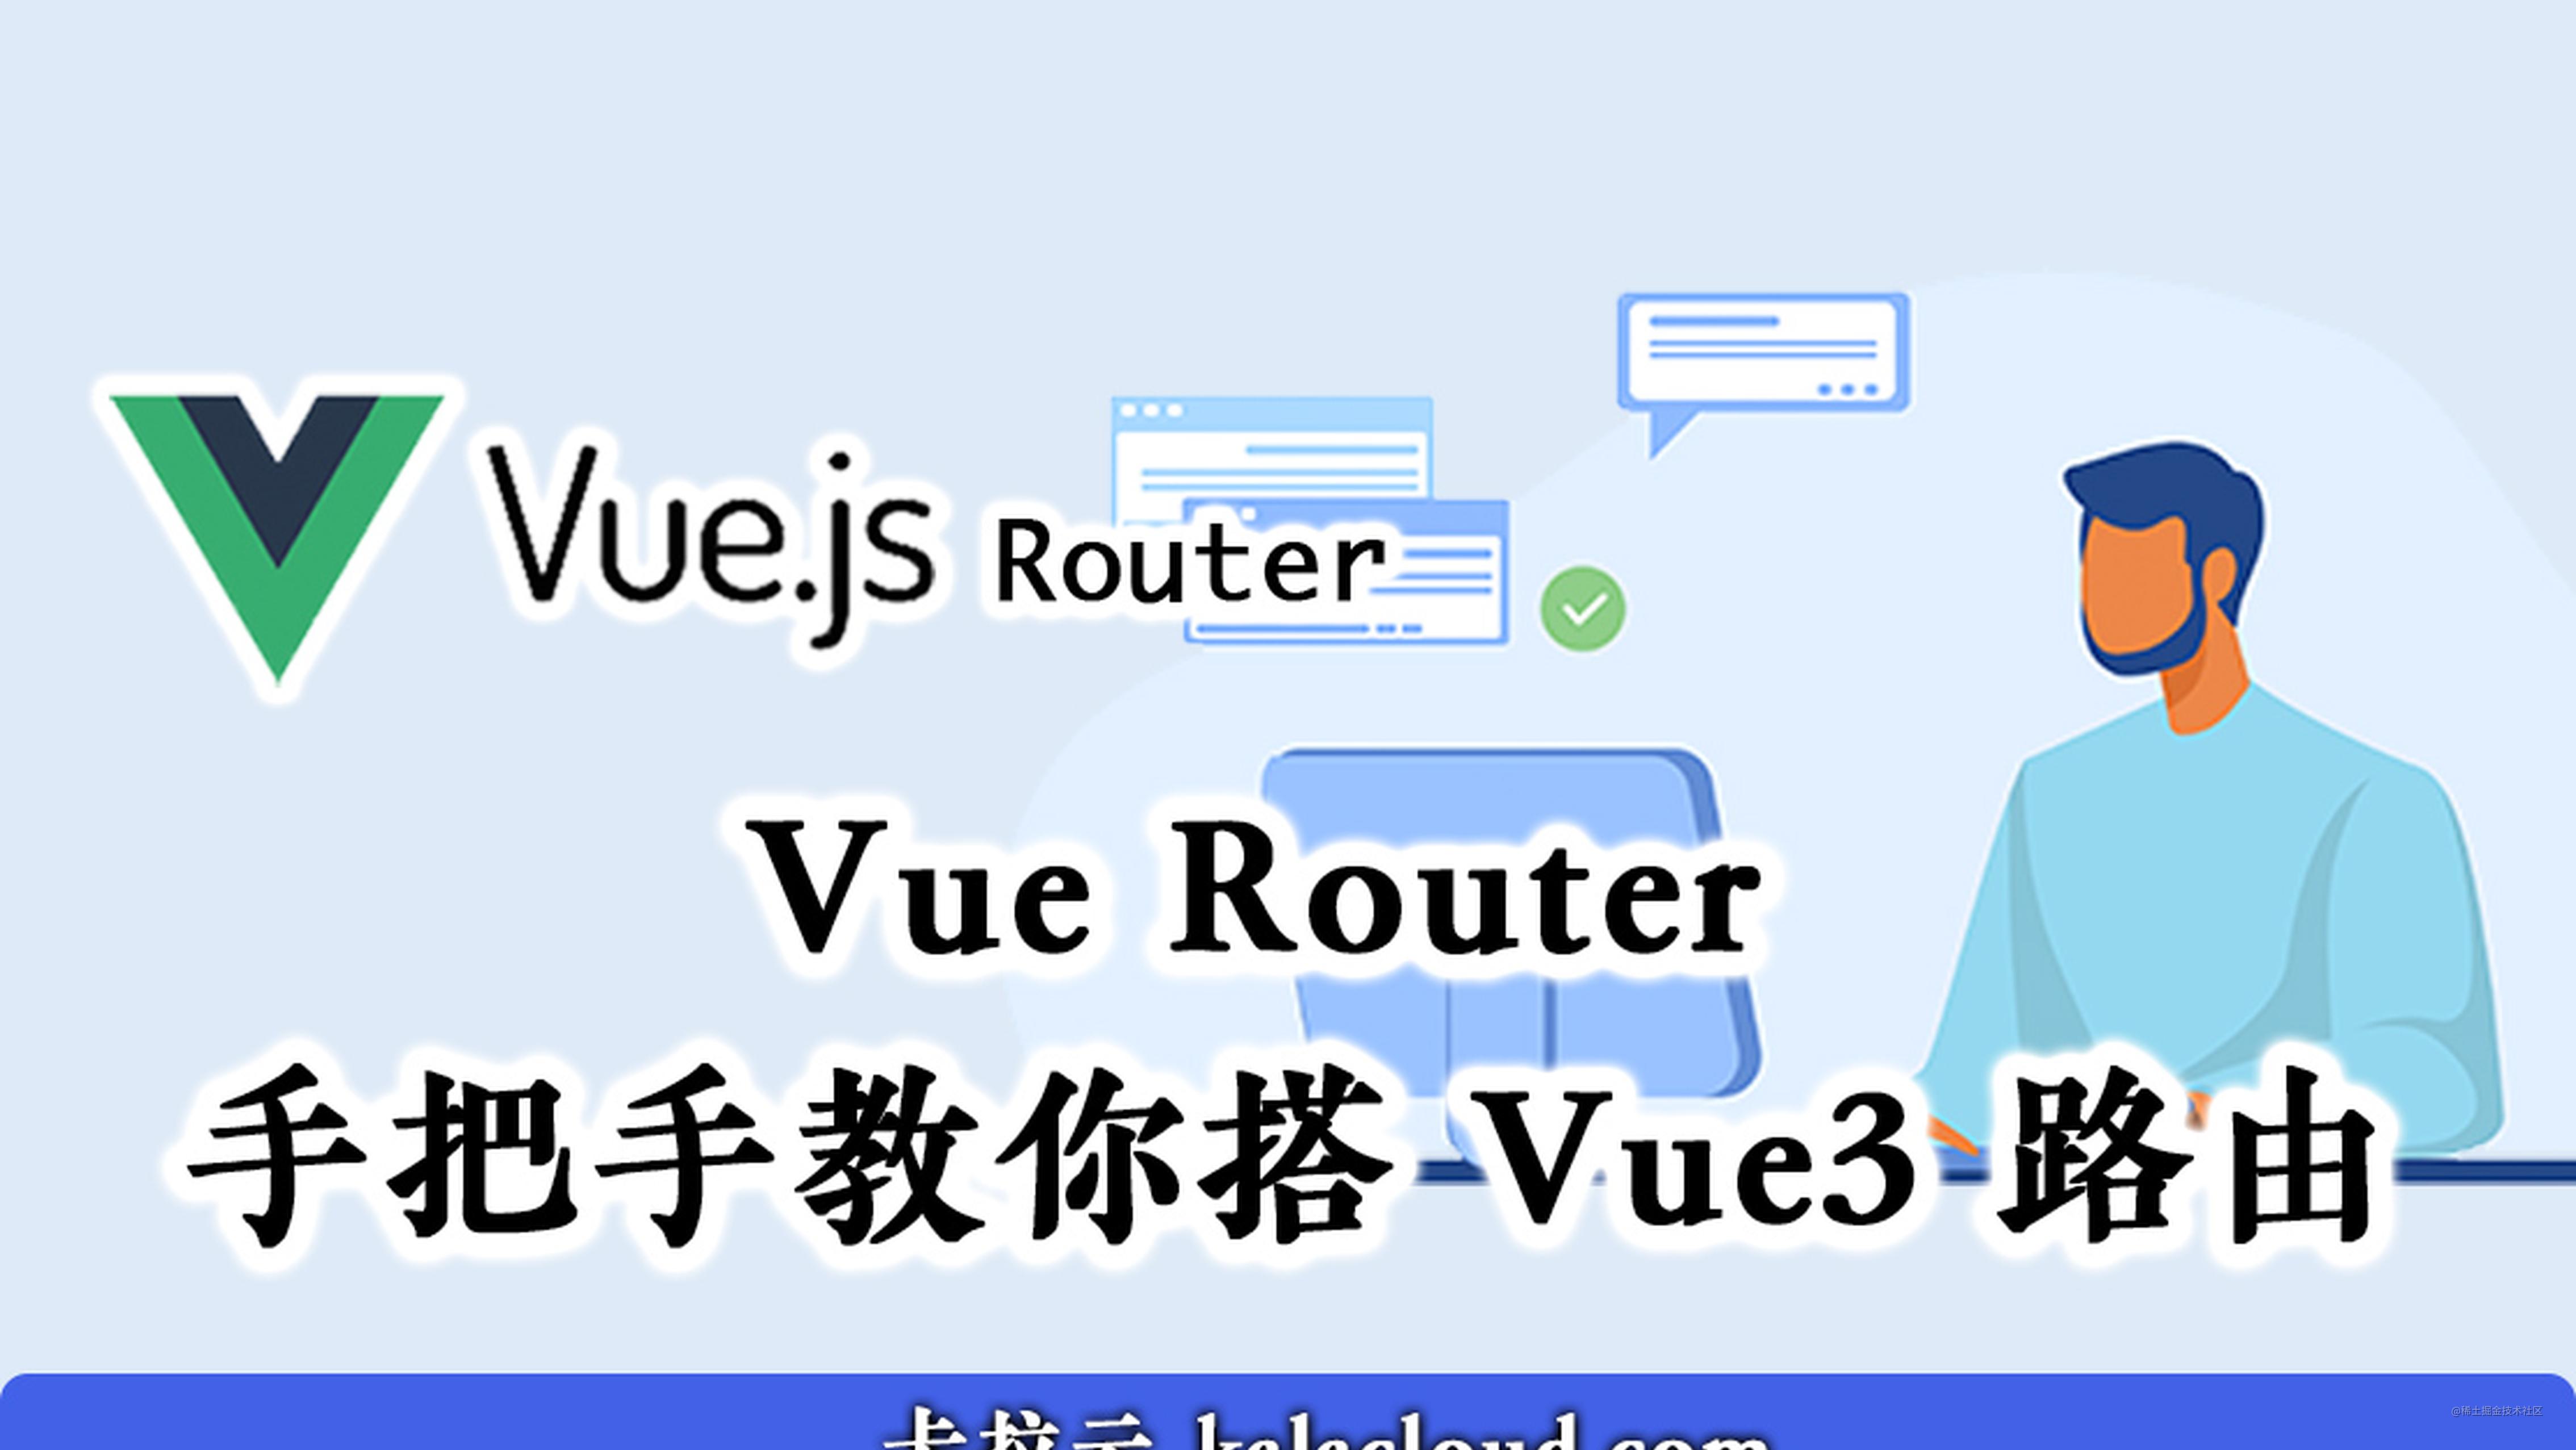 Vue Router 手把手教你搭 Vue3 路由 - 卡拉云